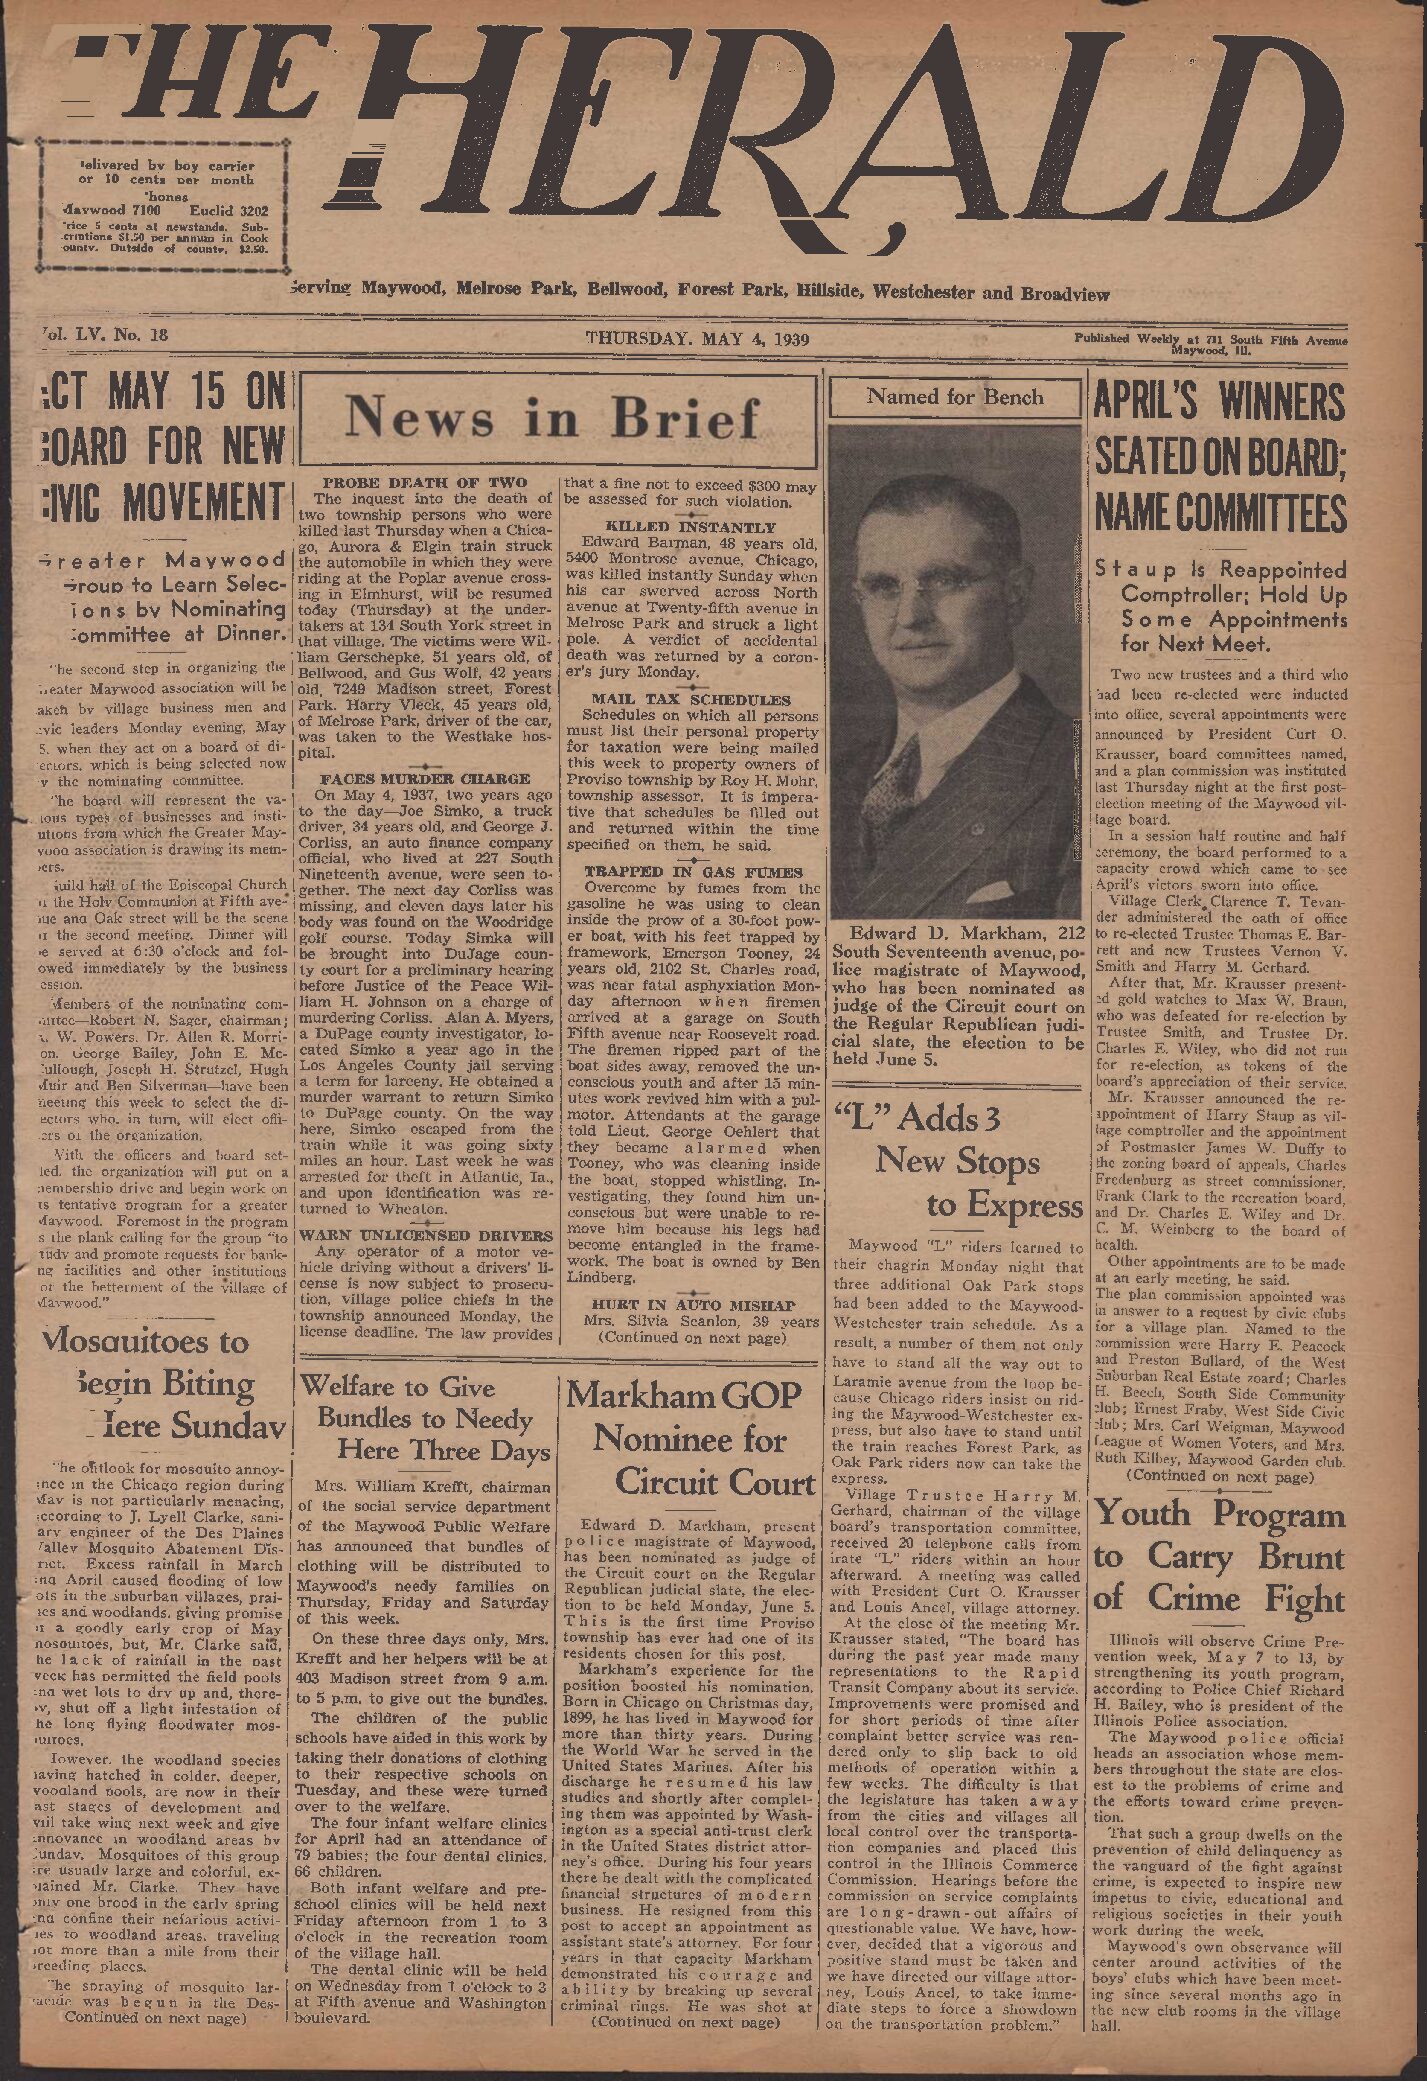 The Herald – 19390504